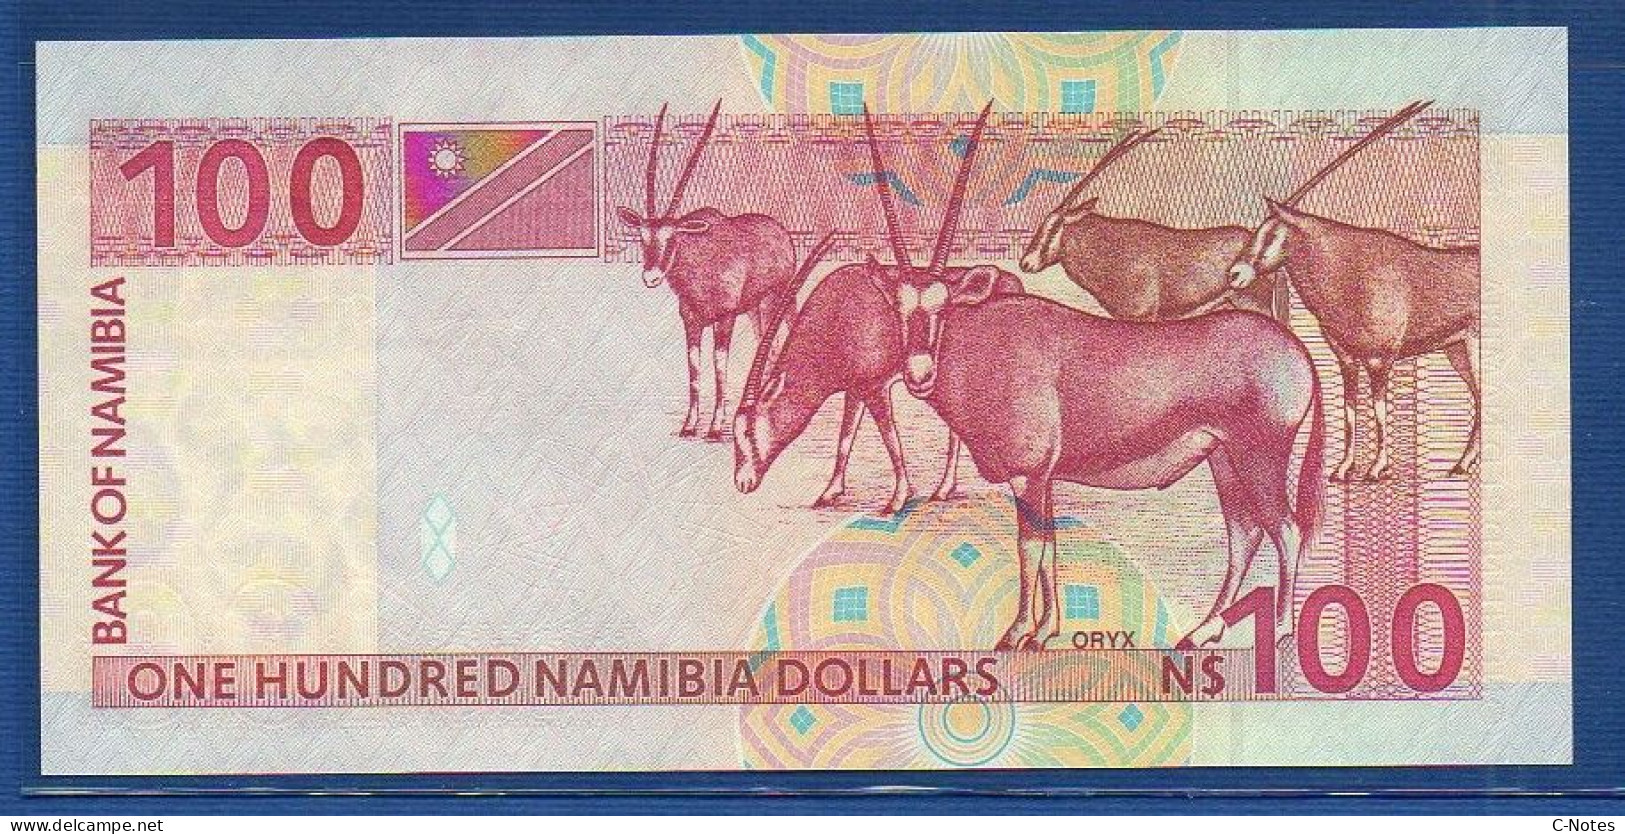 NAMIBIA - P. 9A – 100 Namibia Dollars ND, UNC, S/n J57681379  - 8 Digits Serial - Namibië